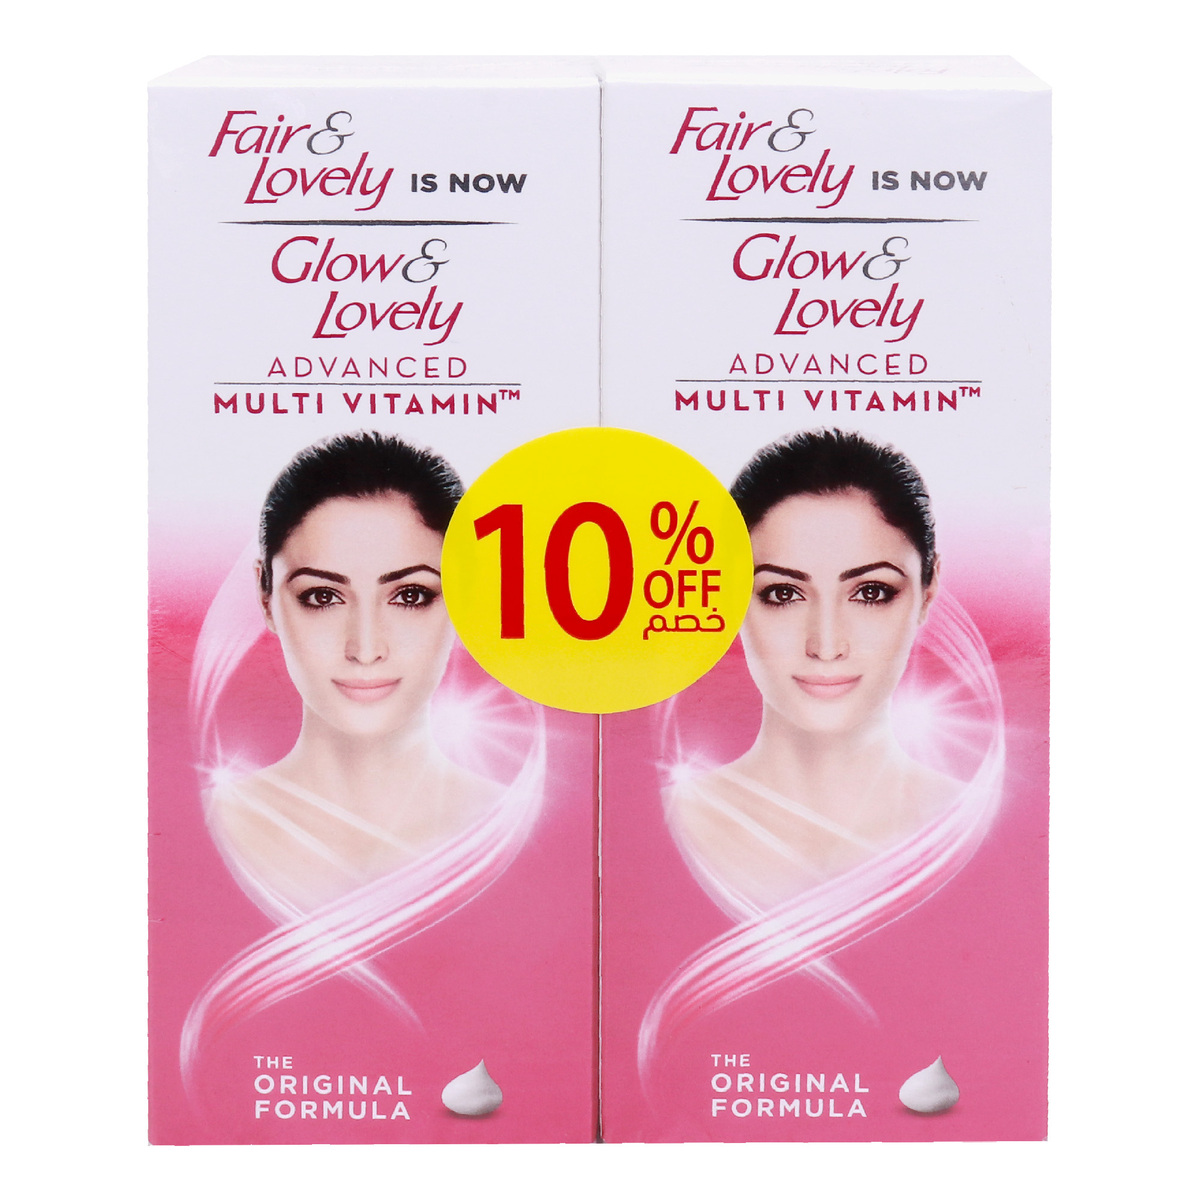 Glow & Lovely Original Advanced Multi-Vitamin Face Cream Value Pack 2 x 80 g